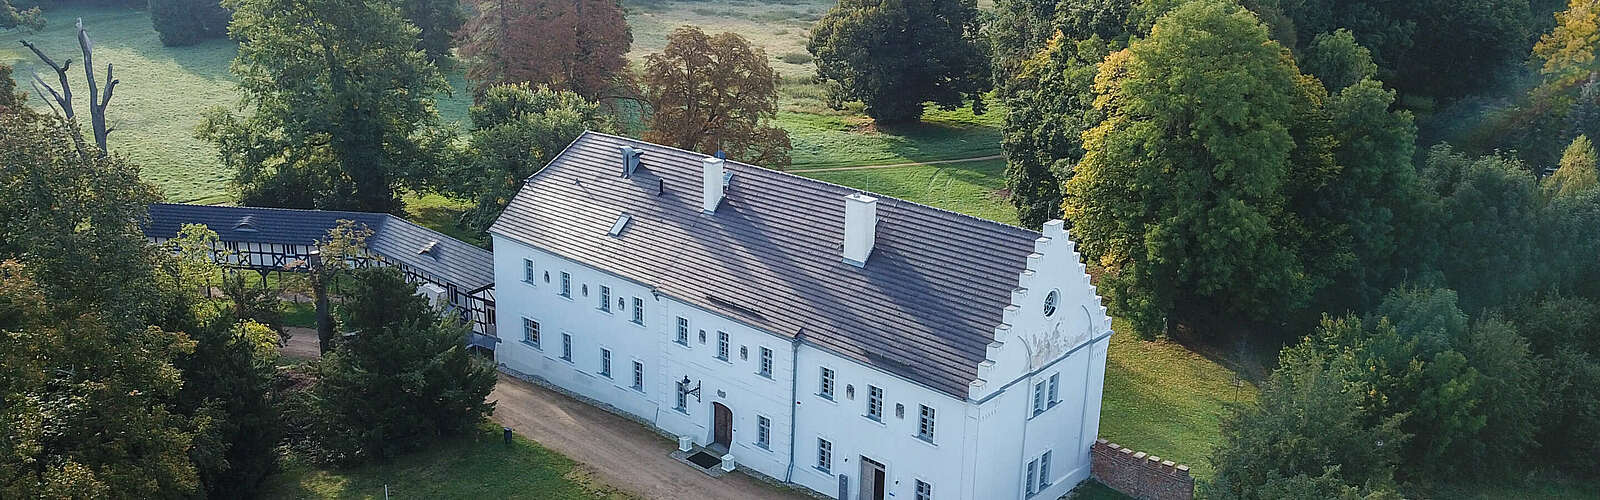 Drohnenaufnahme Schloss Baruth,
        
    

        Foto: Tourismusverband Fläming e.V./Steven Hille